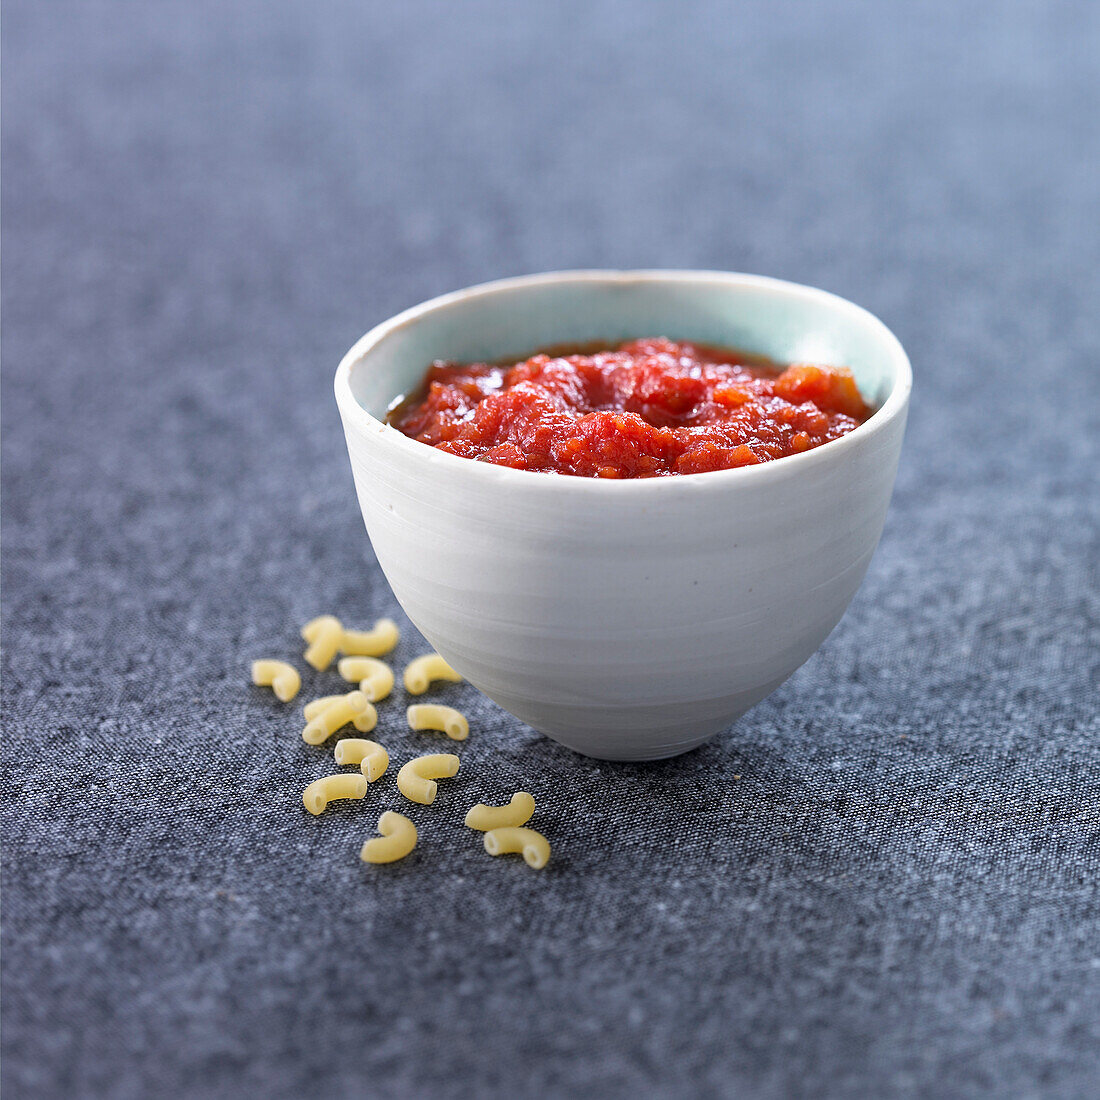 Tomato sauce for pasta shells